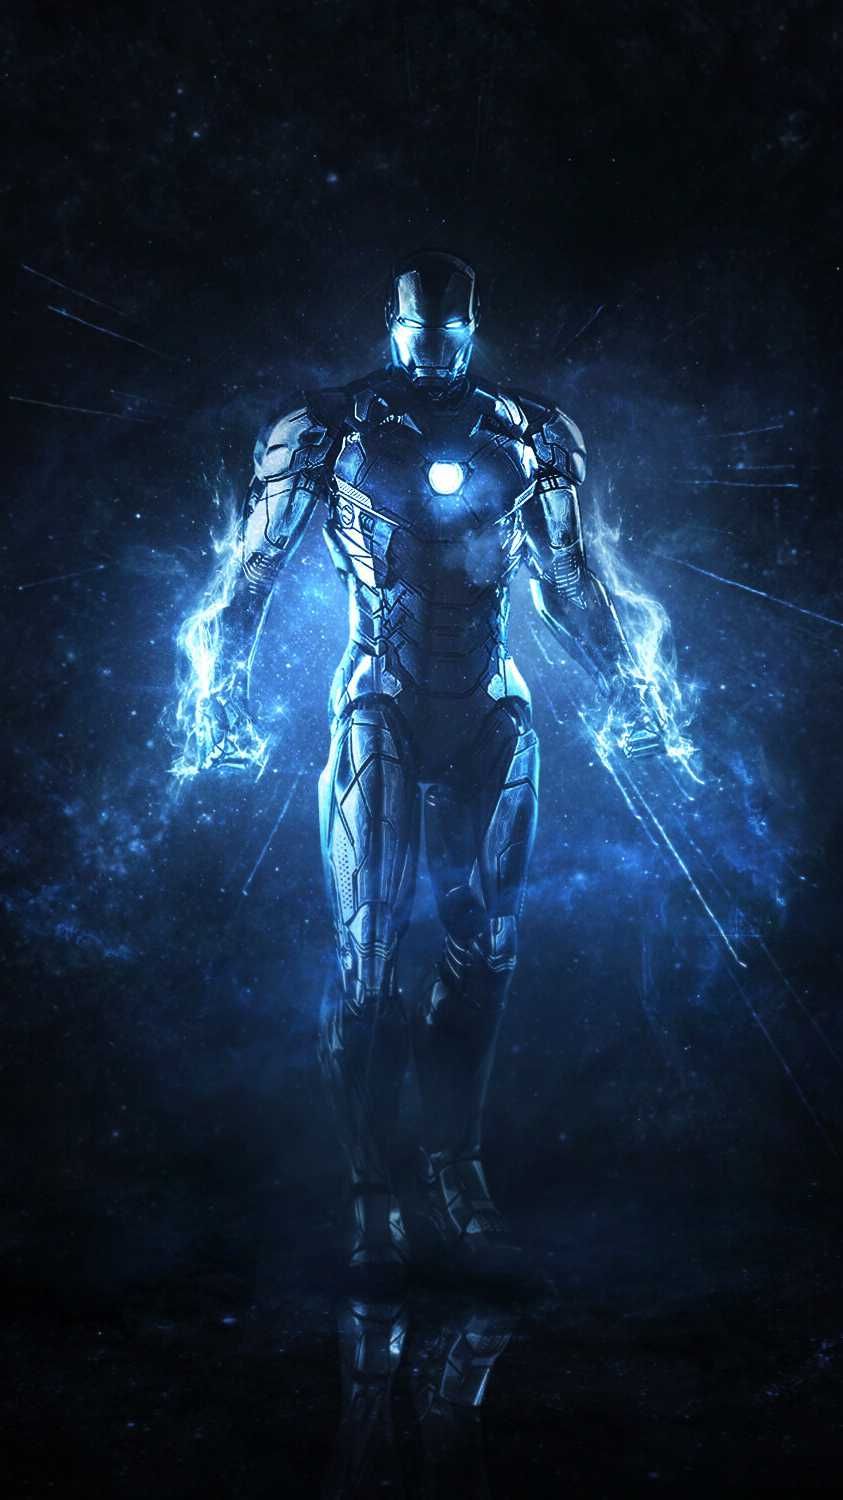 Dark Space Iron Man IPhone Wallpaper. Iron man avengers, Iron man wallpaper, Iron man art